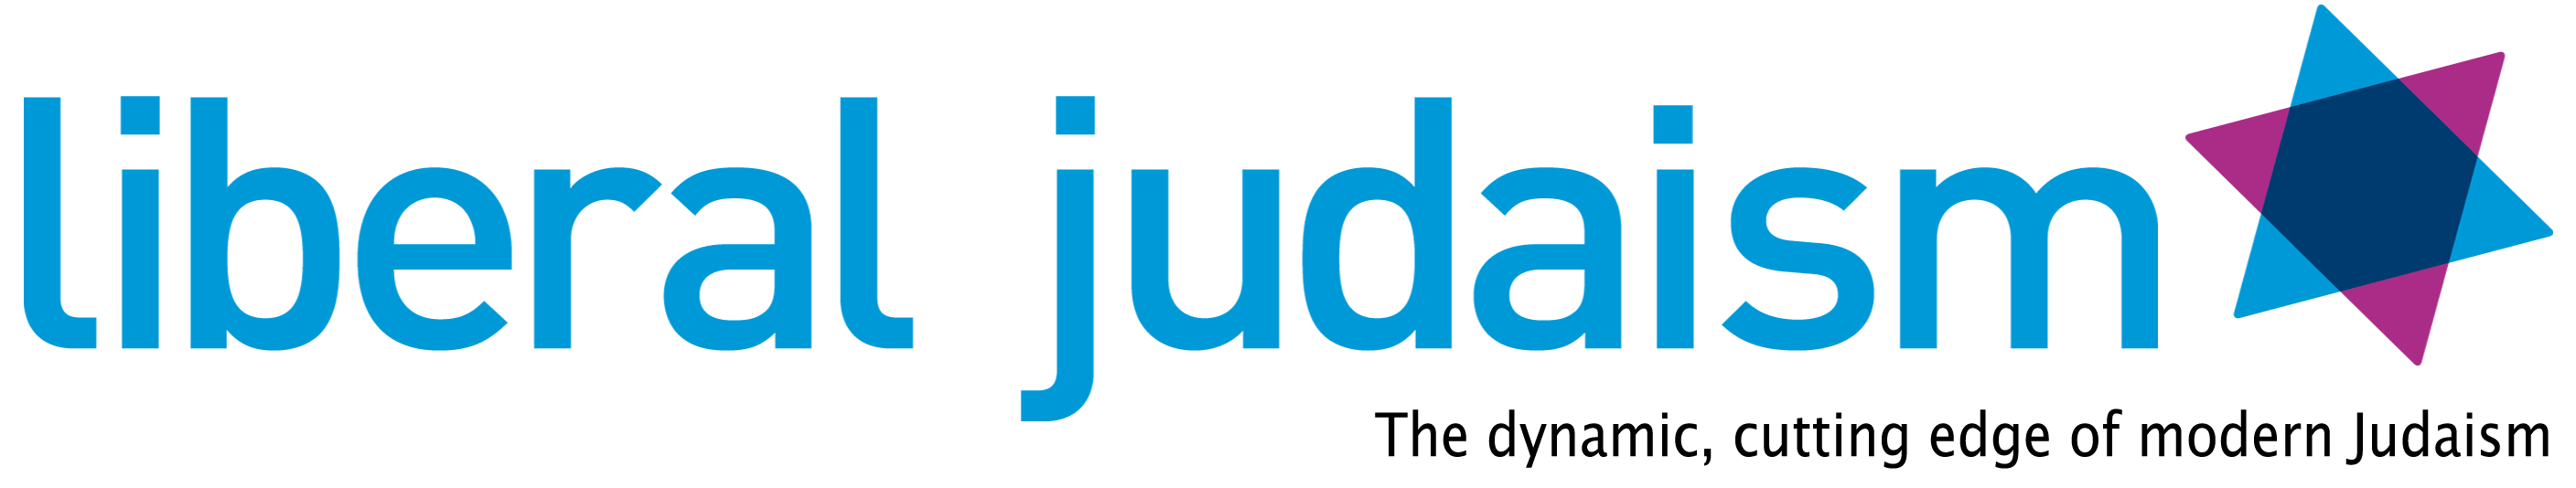 Judaism Logo - Liberal Judaism. The dynamic, cutting edge of modern Judaism